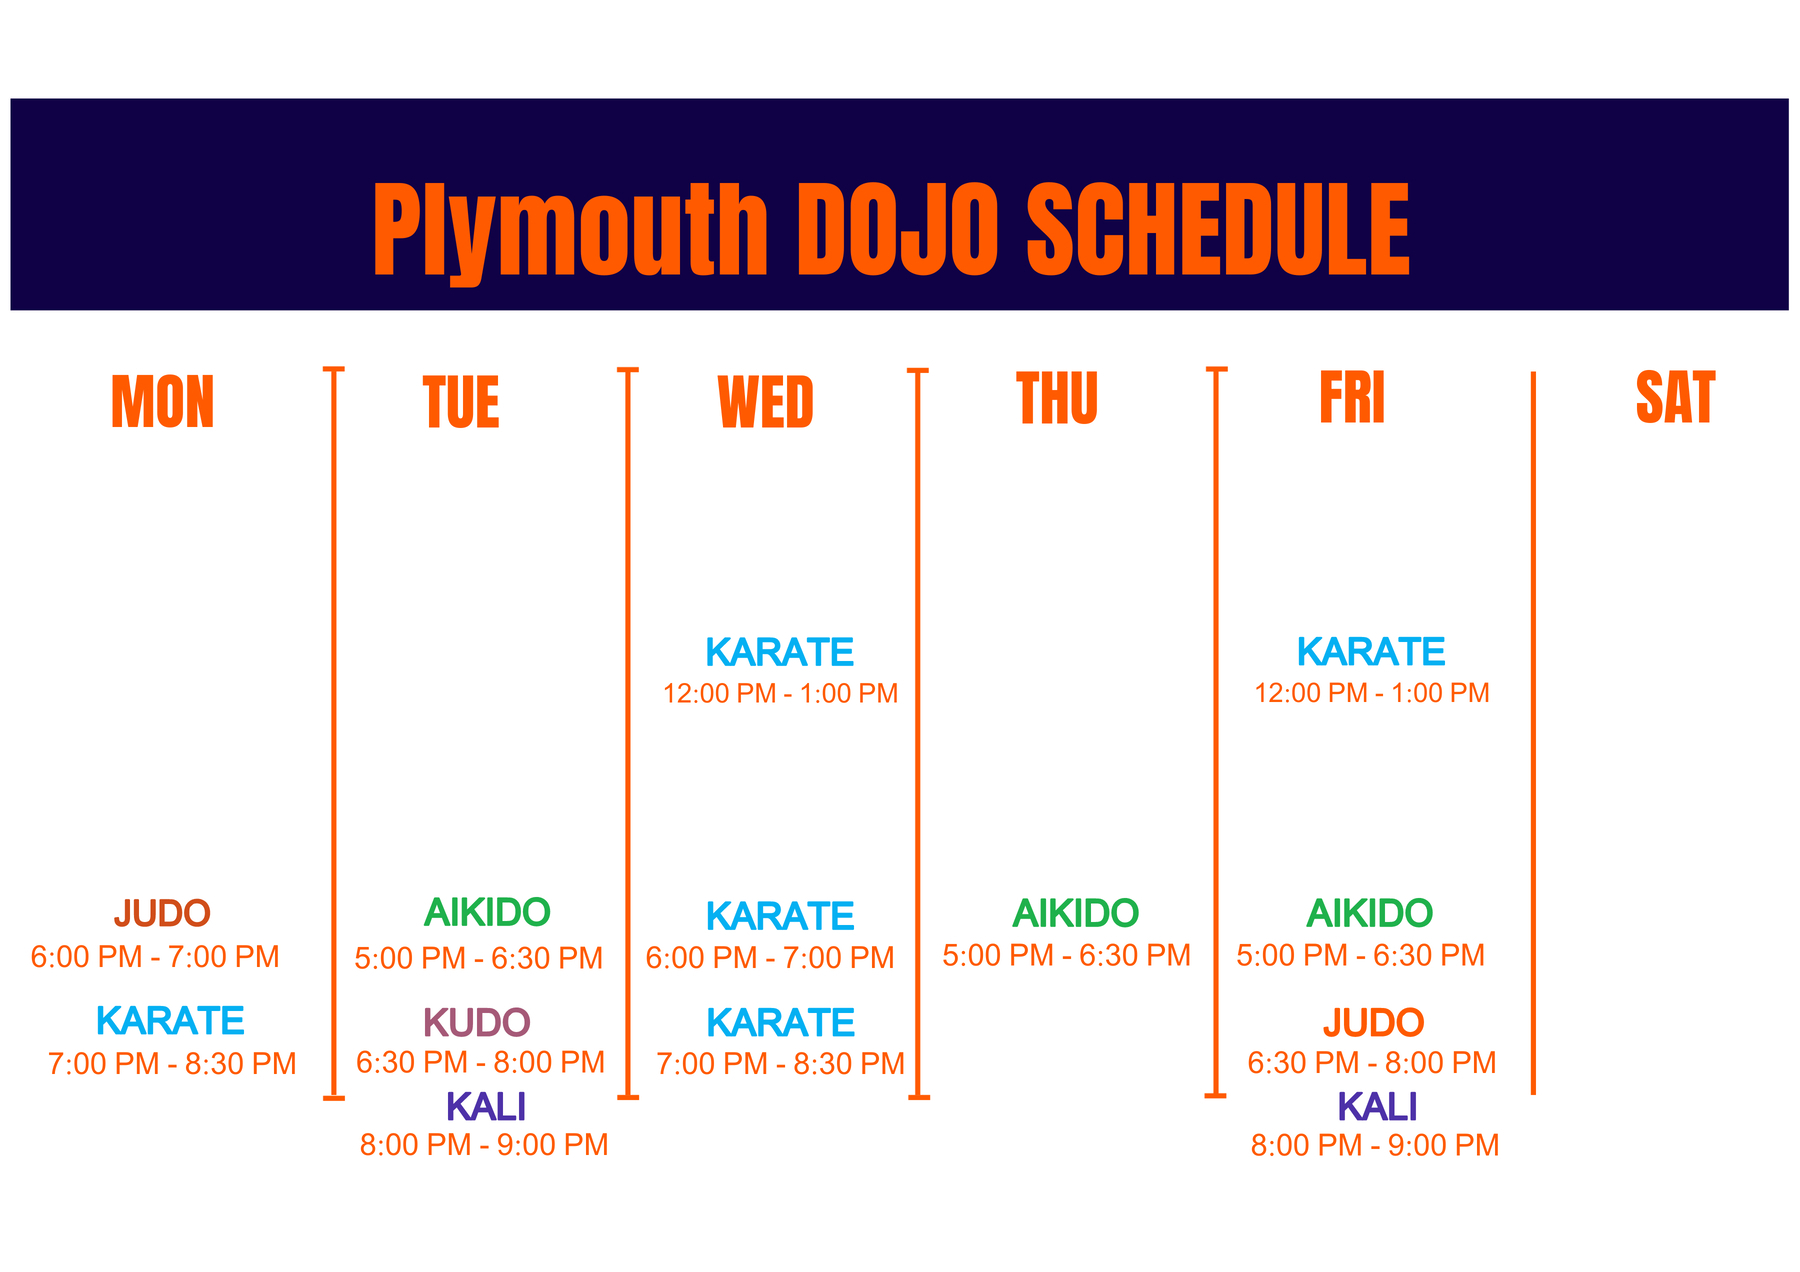 JMA Schedule Plymouth no iaido